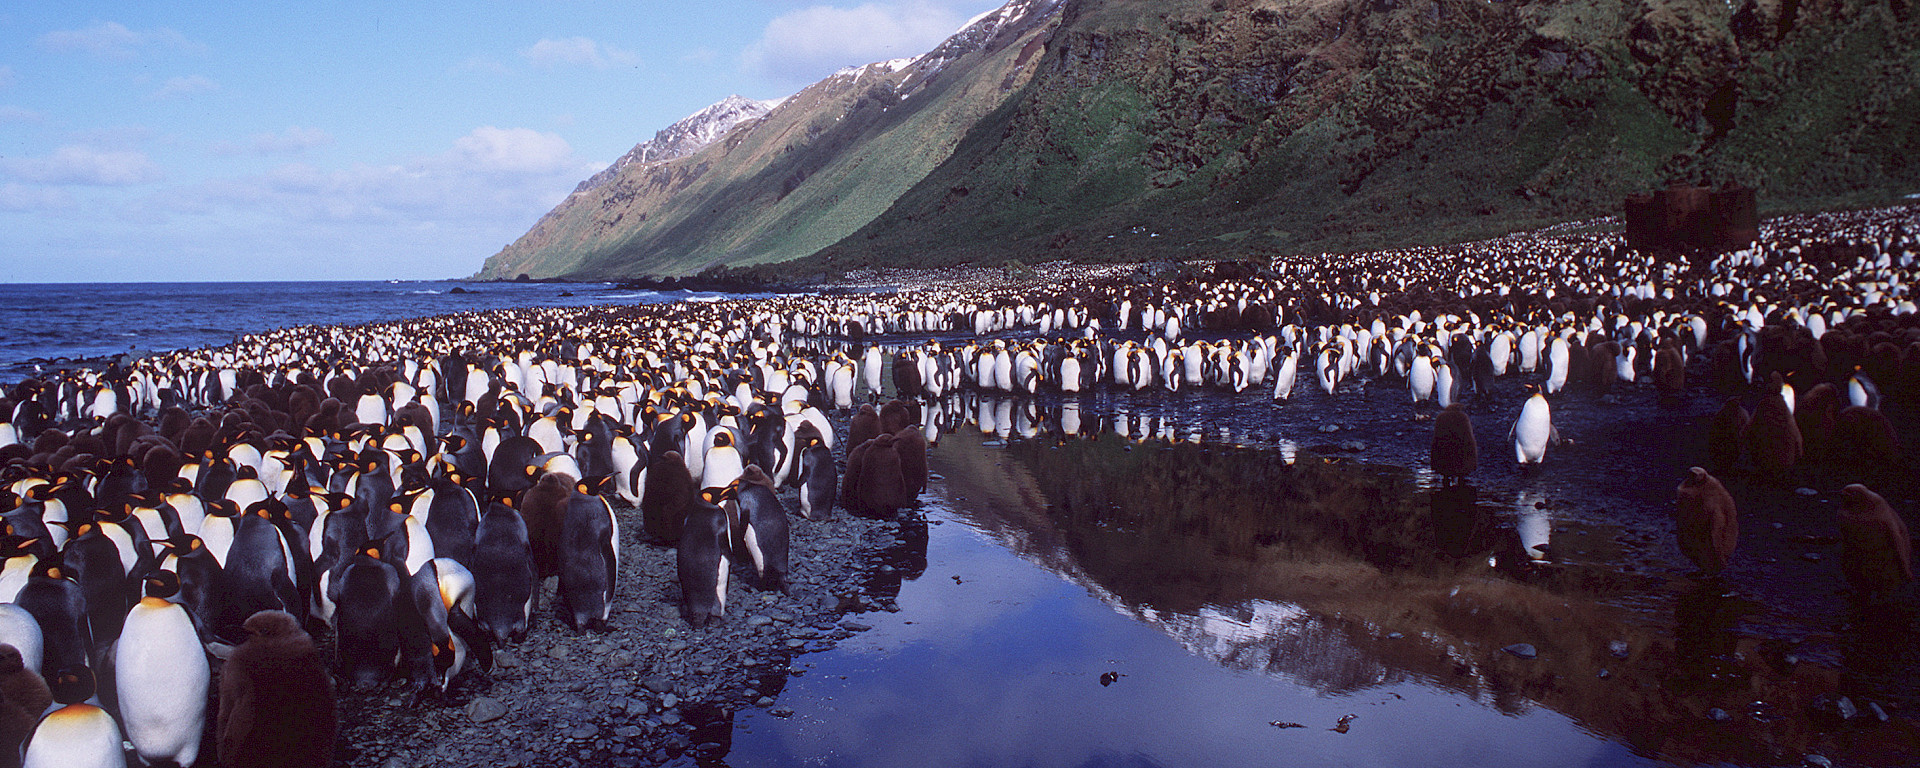 King penguin colony at Lusitania Bay